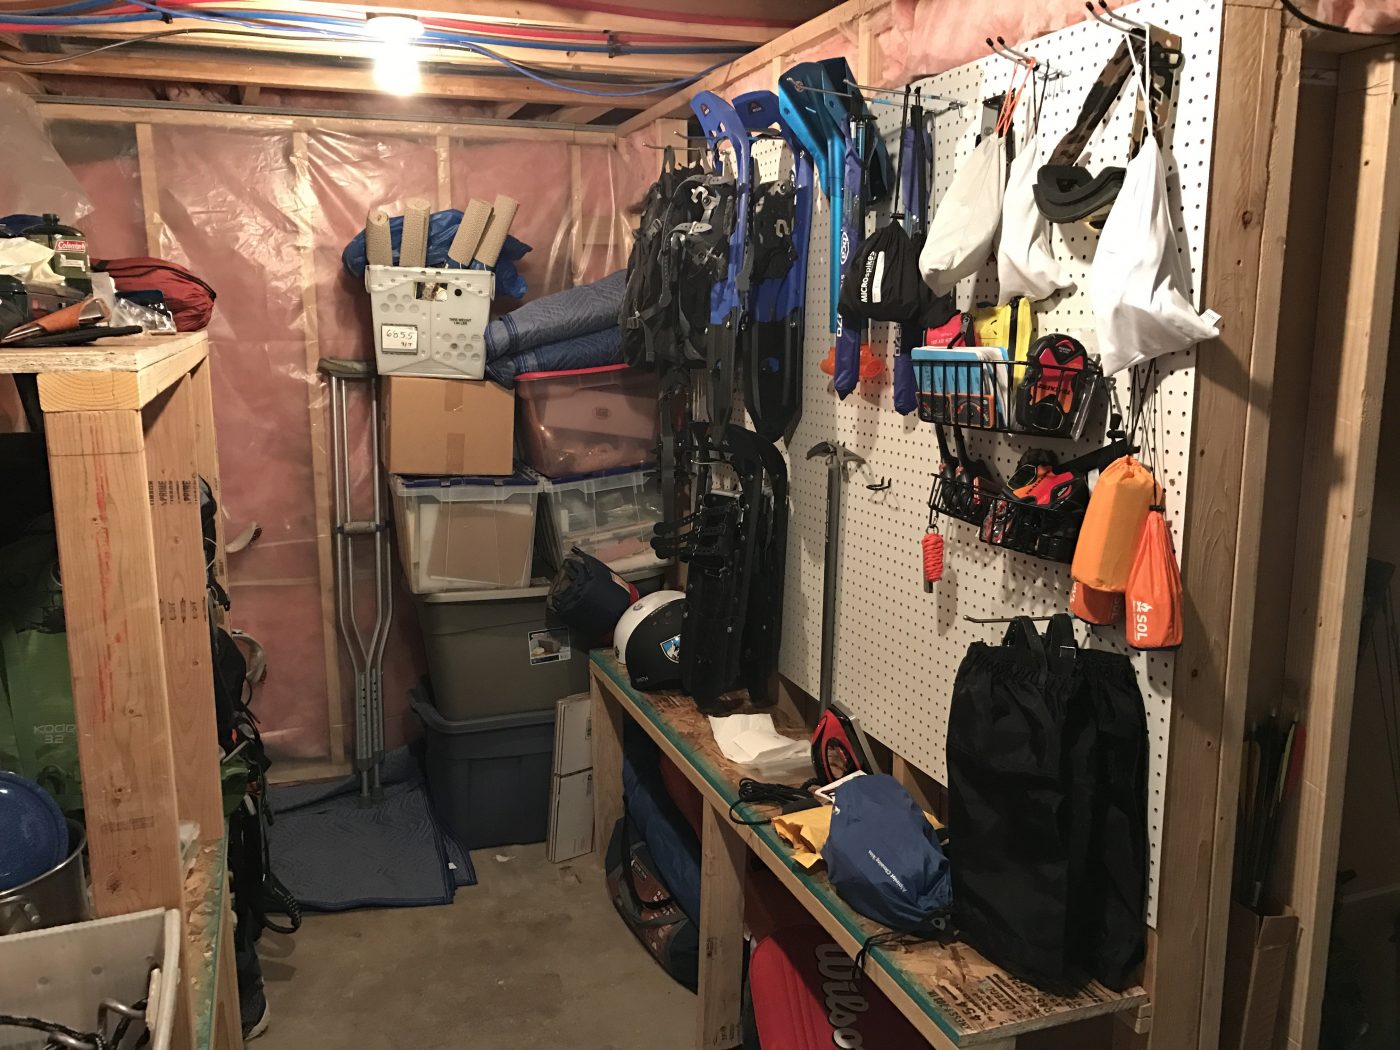 How to Build a DIY Outdoor Gear Room